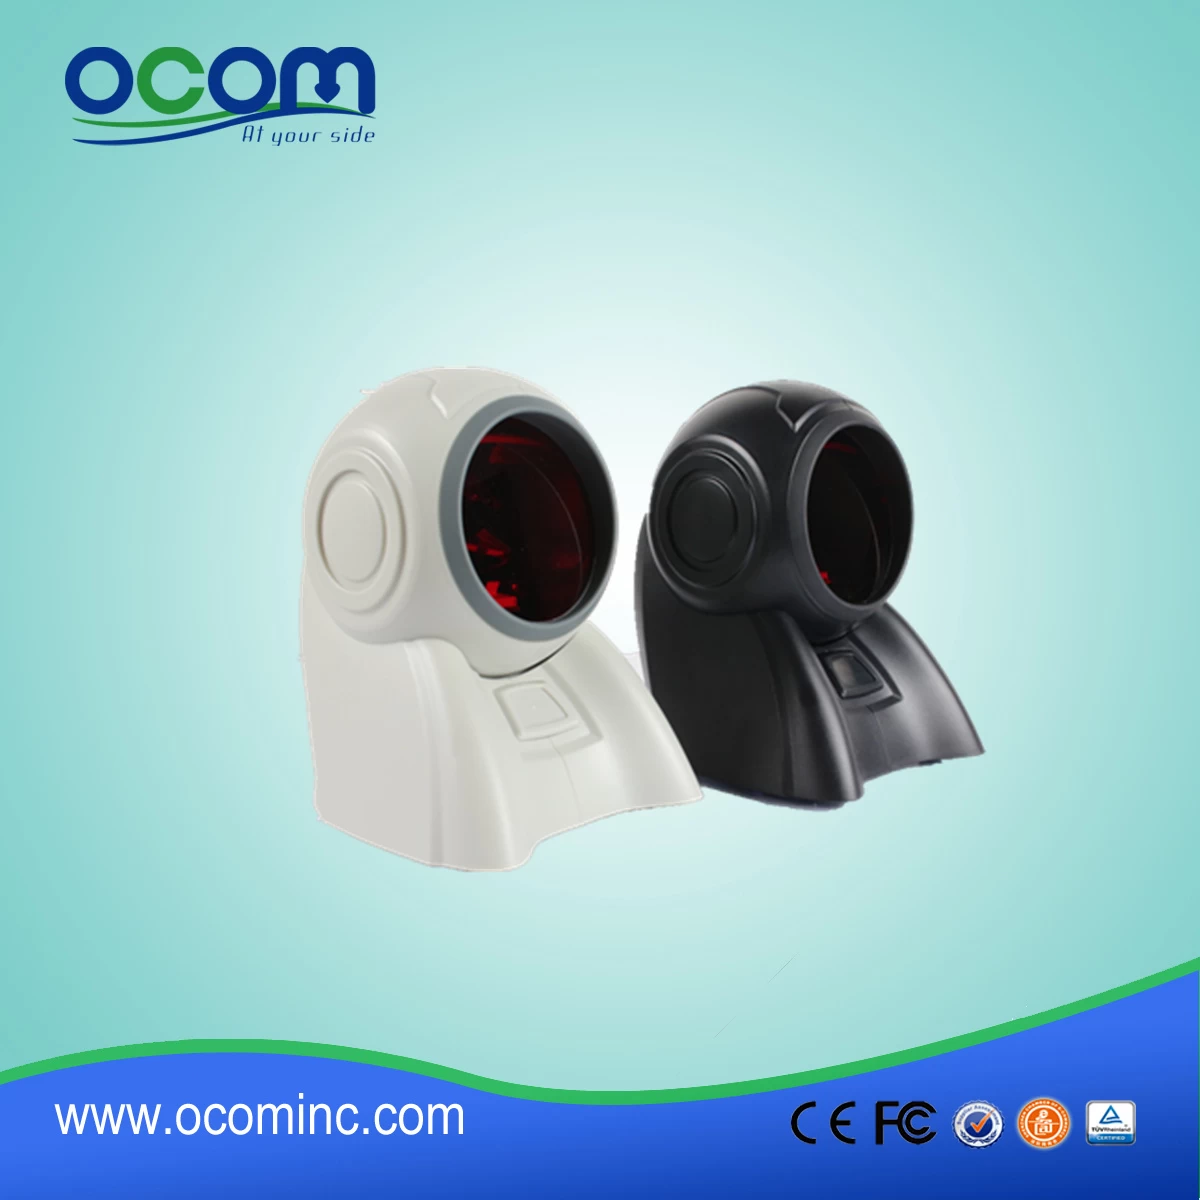 china Omni barcode scanner price,Omni barcode scanner machine